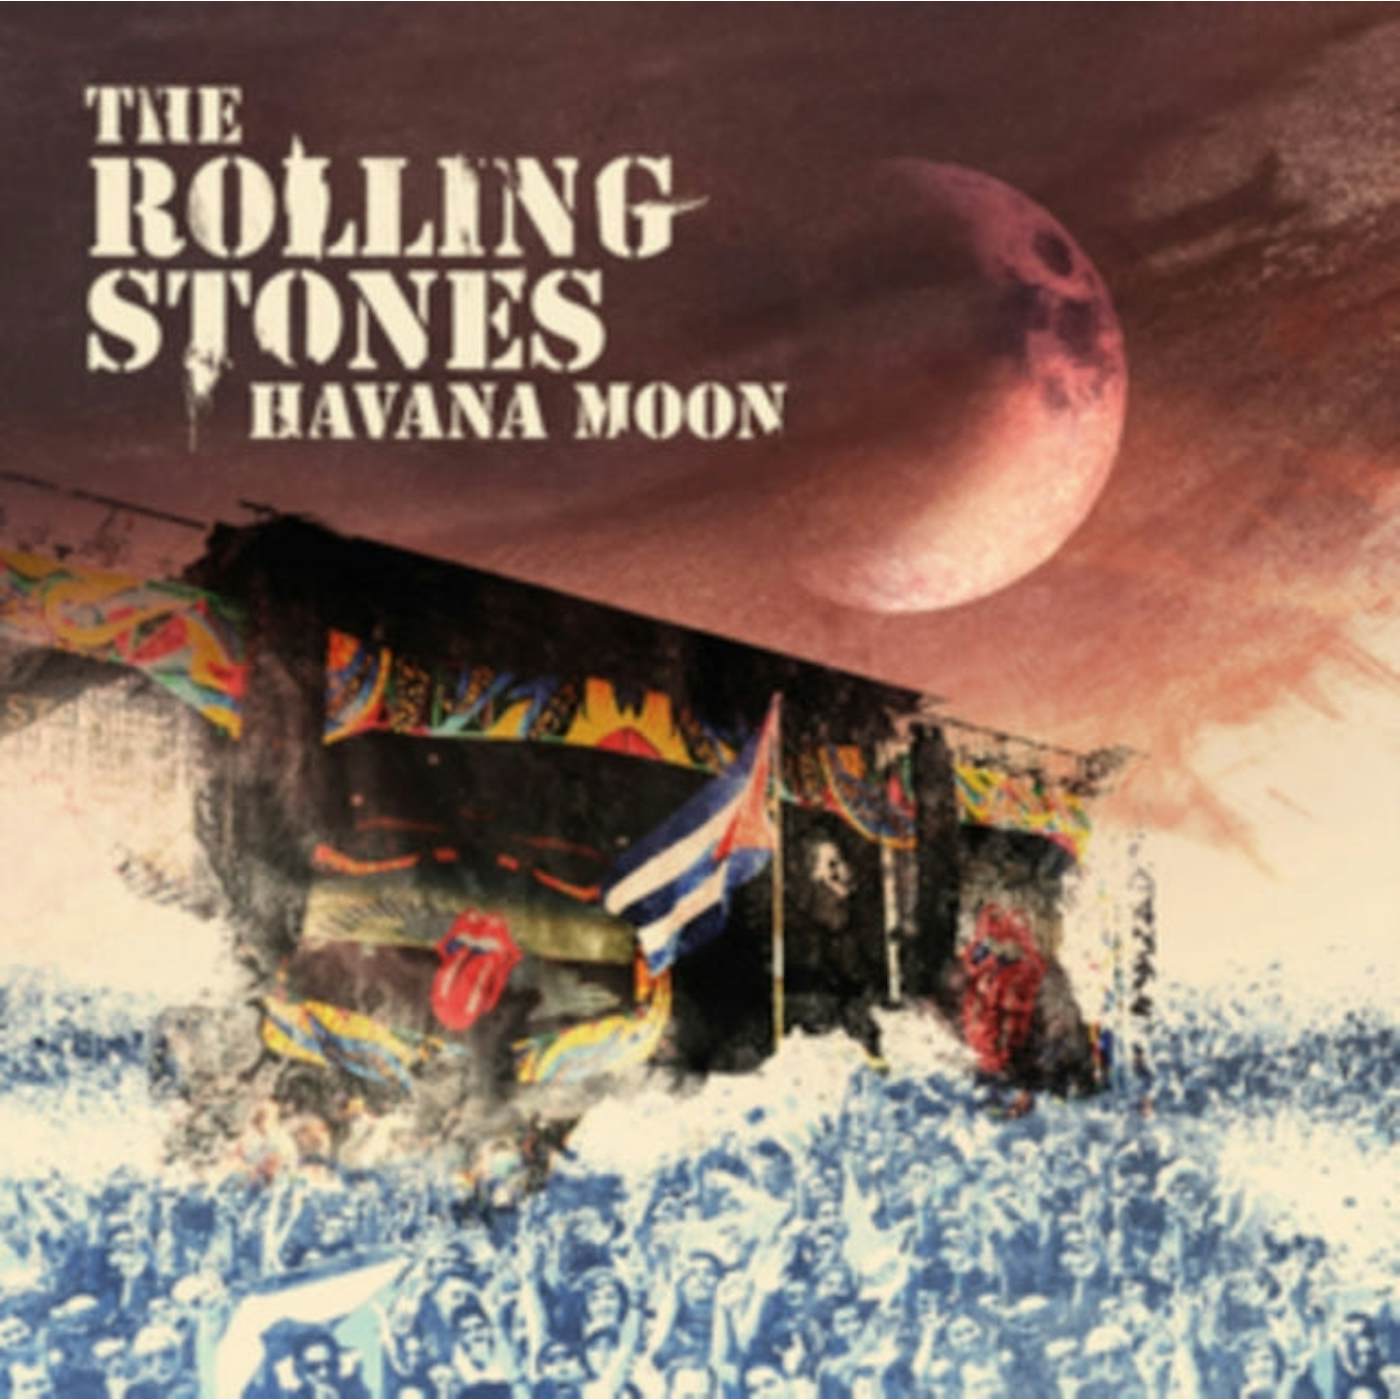 The Rolling Stones LP Vinyl Record - Havana Moon